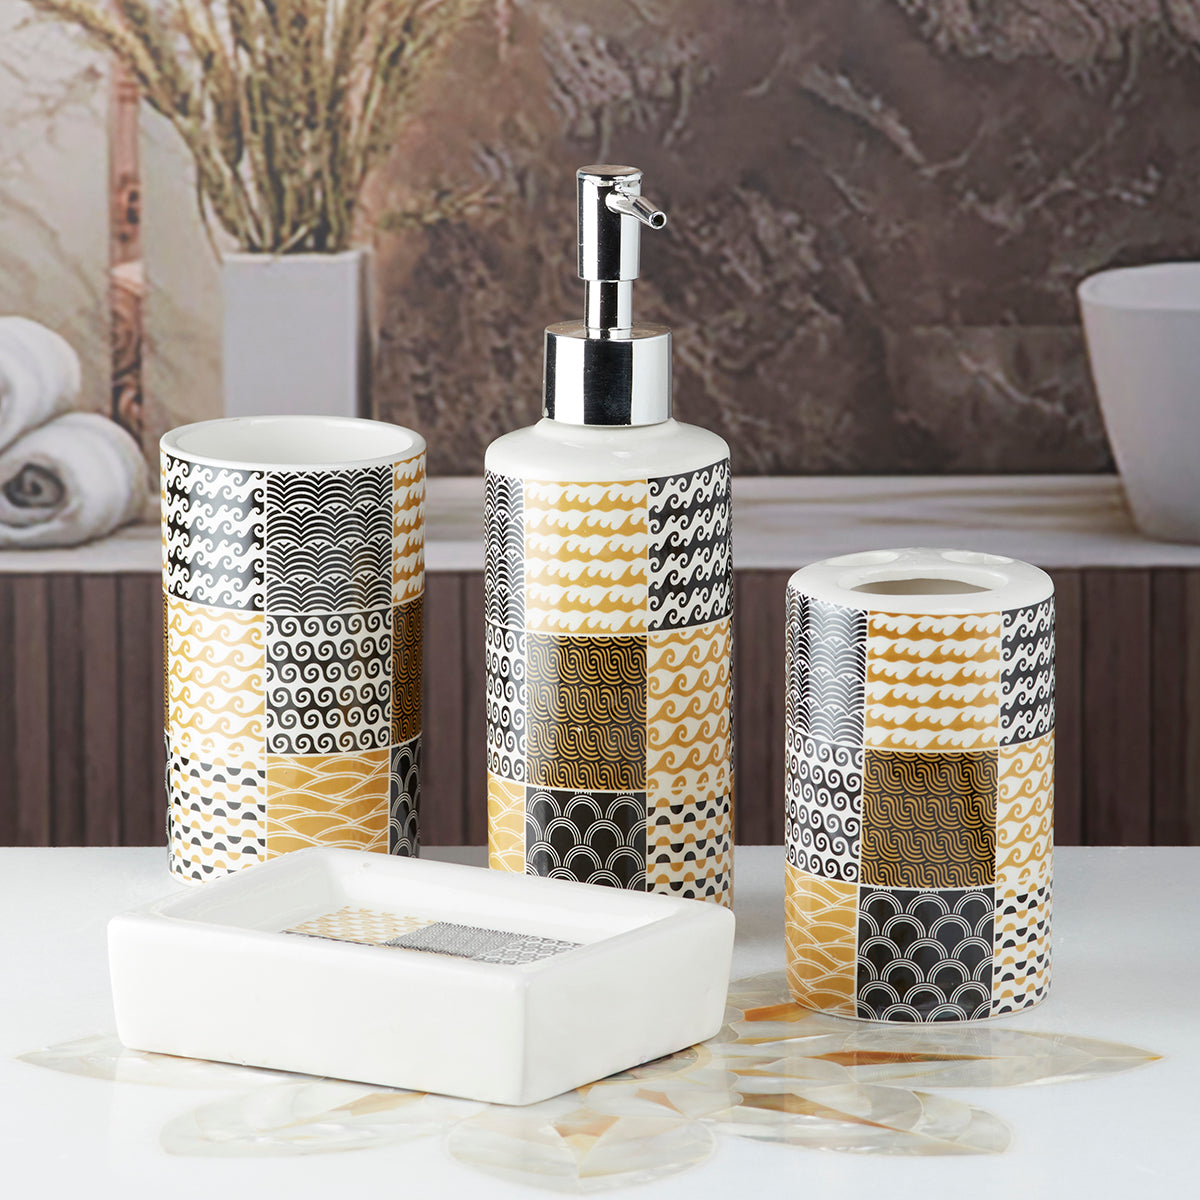 Ceramic Bathroom Accessories Set of 4 Bath Set with Soap Dispenser (7680)